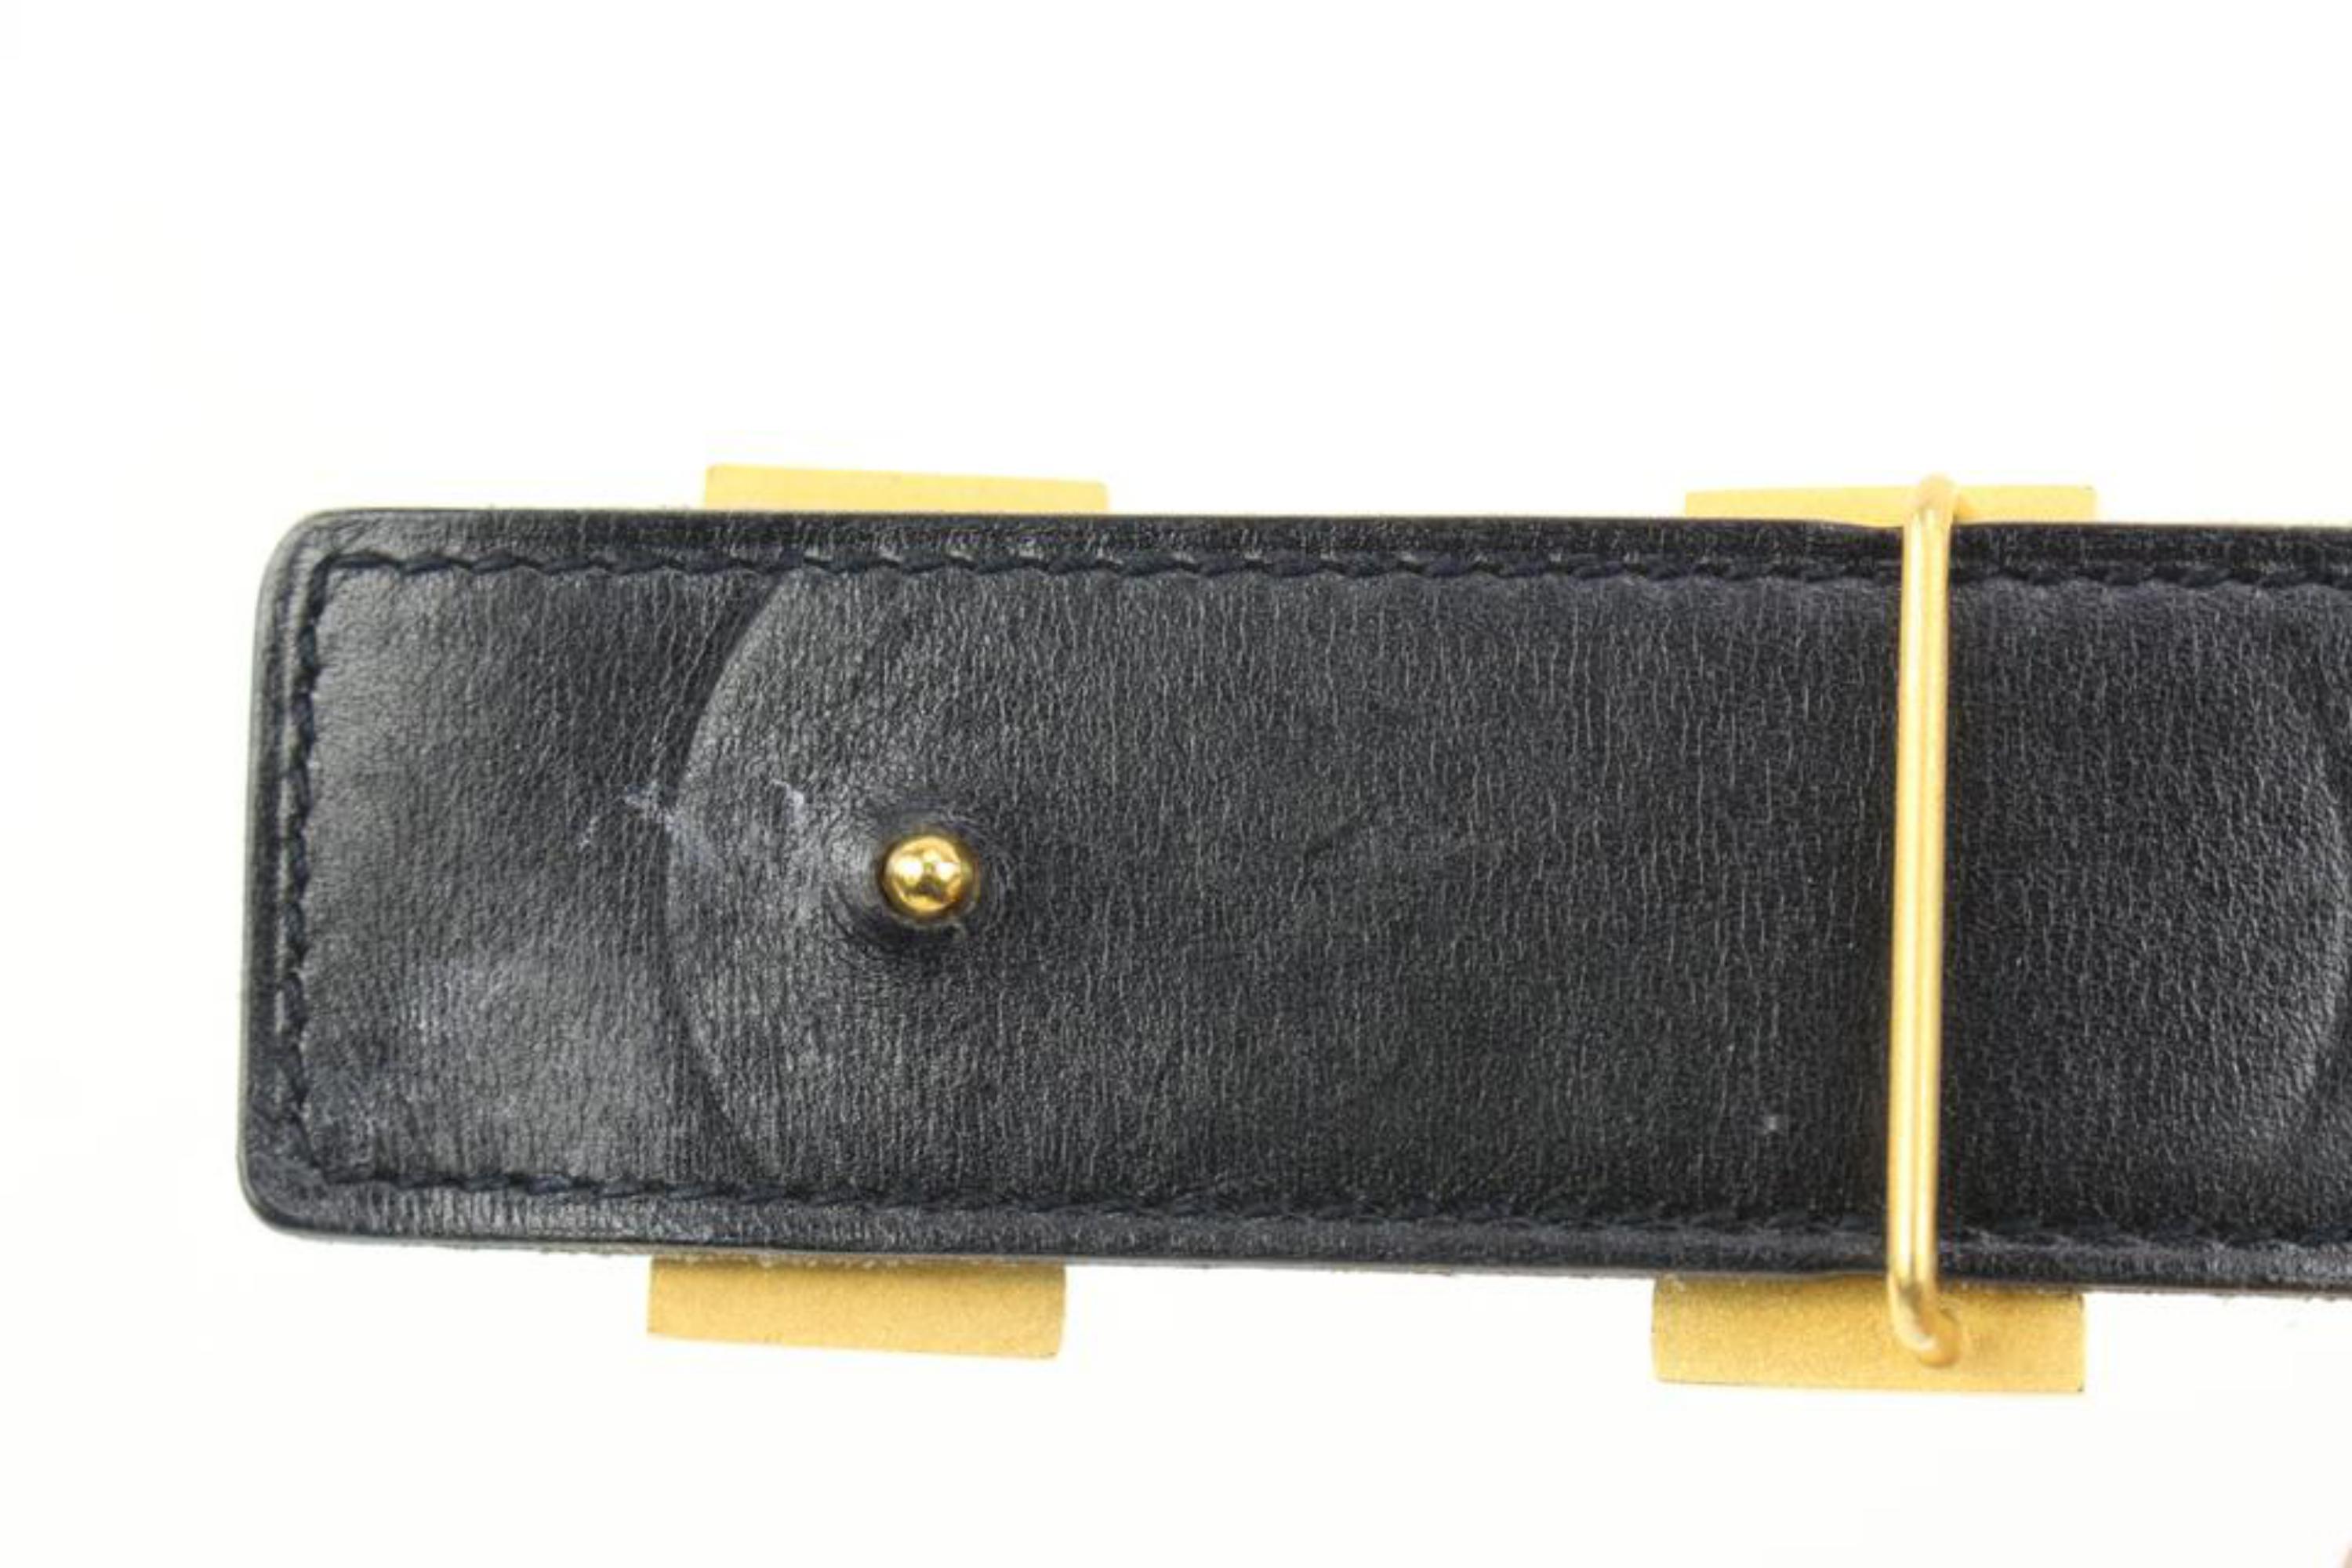 Bleu Kit ceinture logo H réversible 32 mm noir x bleu Jean x or 41h55 en vente